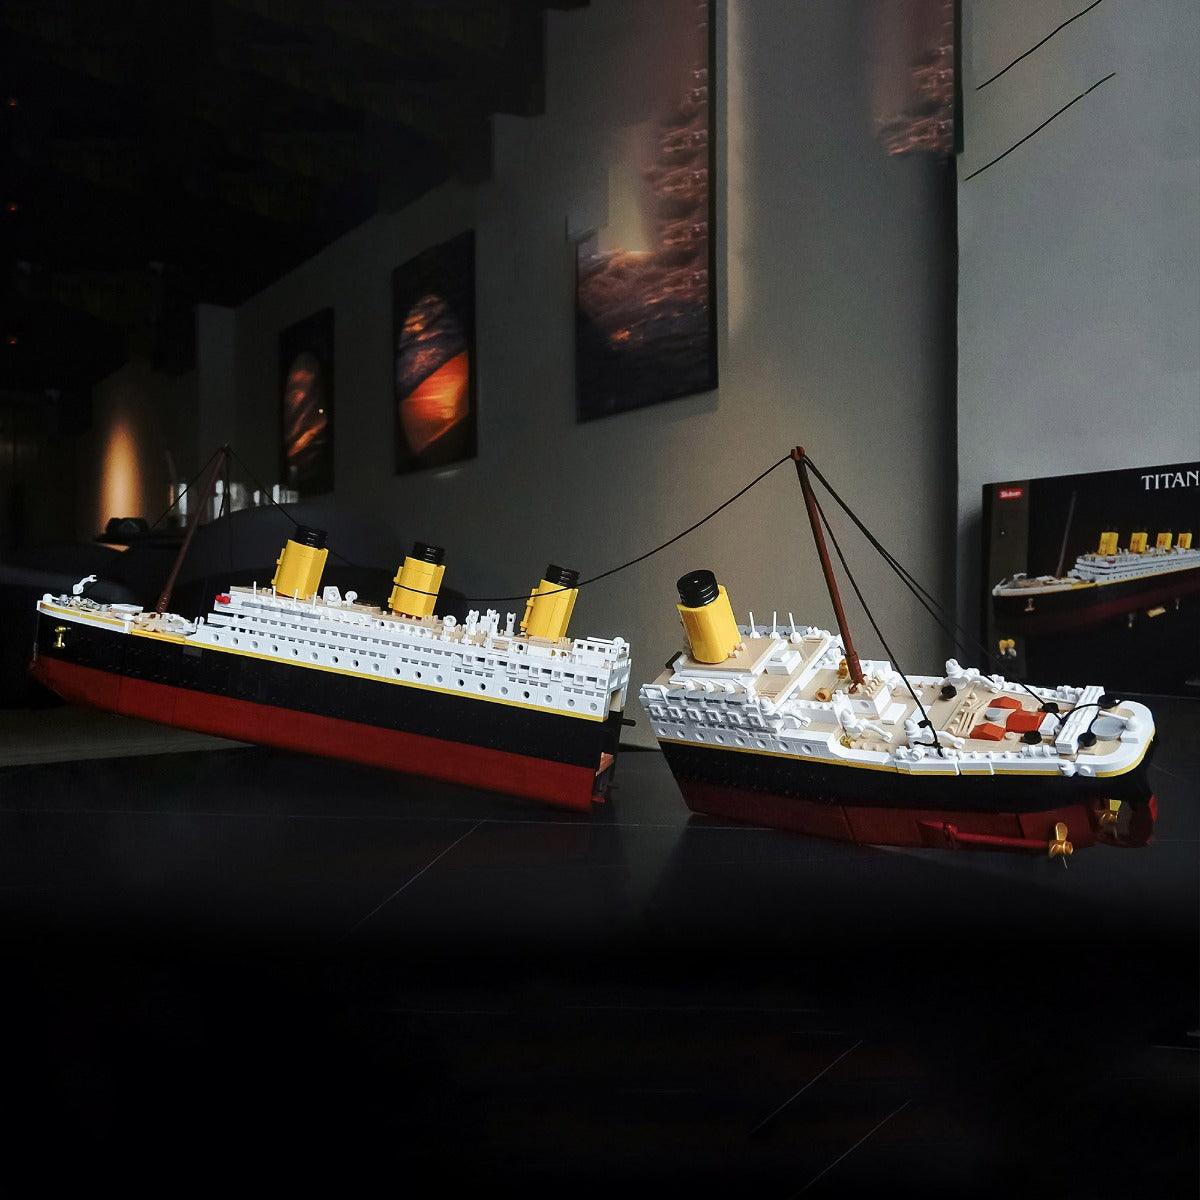 Sluban Titanic Building Blocks For Ages 12+